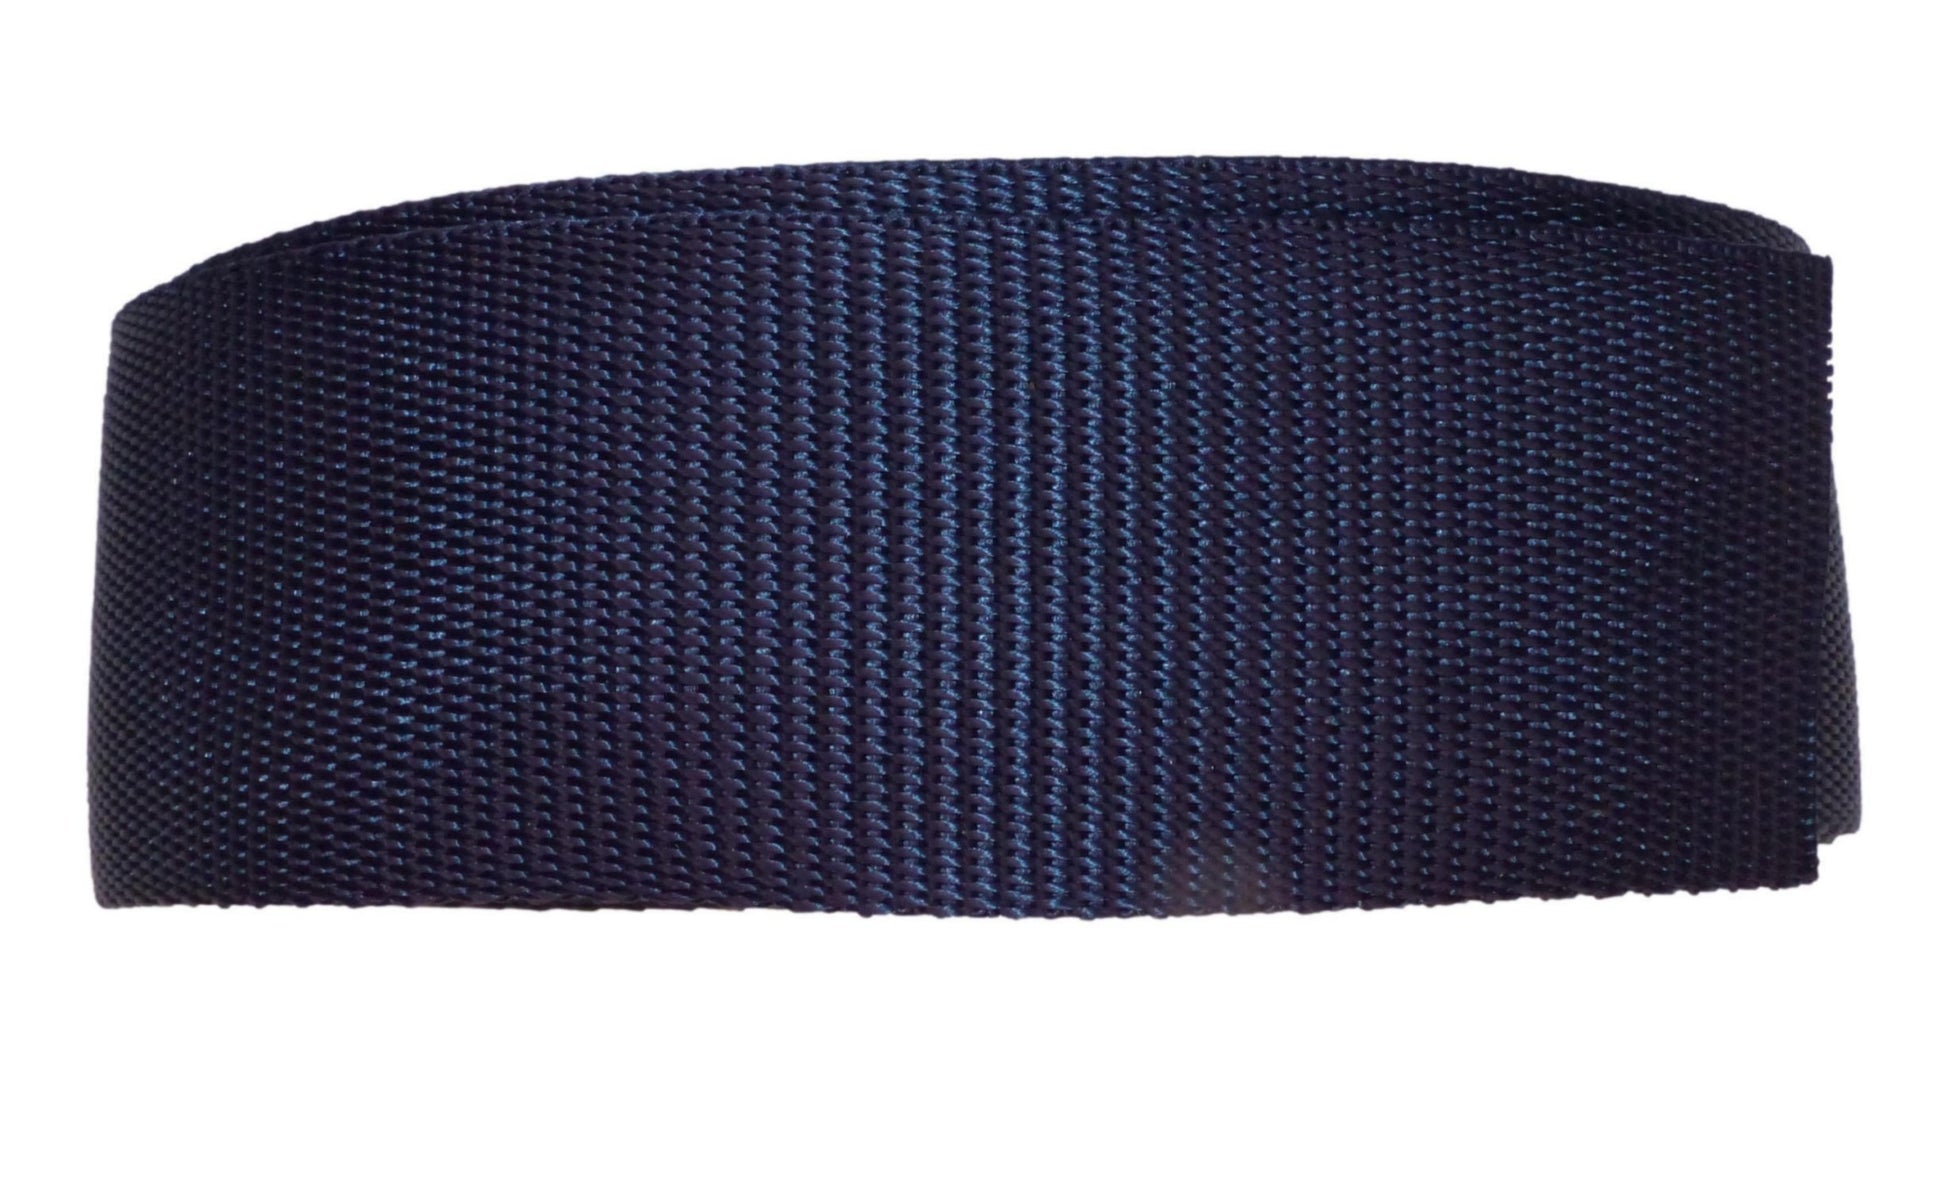 Benristraps 50mm (2") Polypropylene Webbing, 10 Metre (32') Roll in navy blue